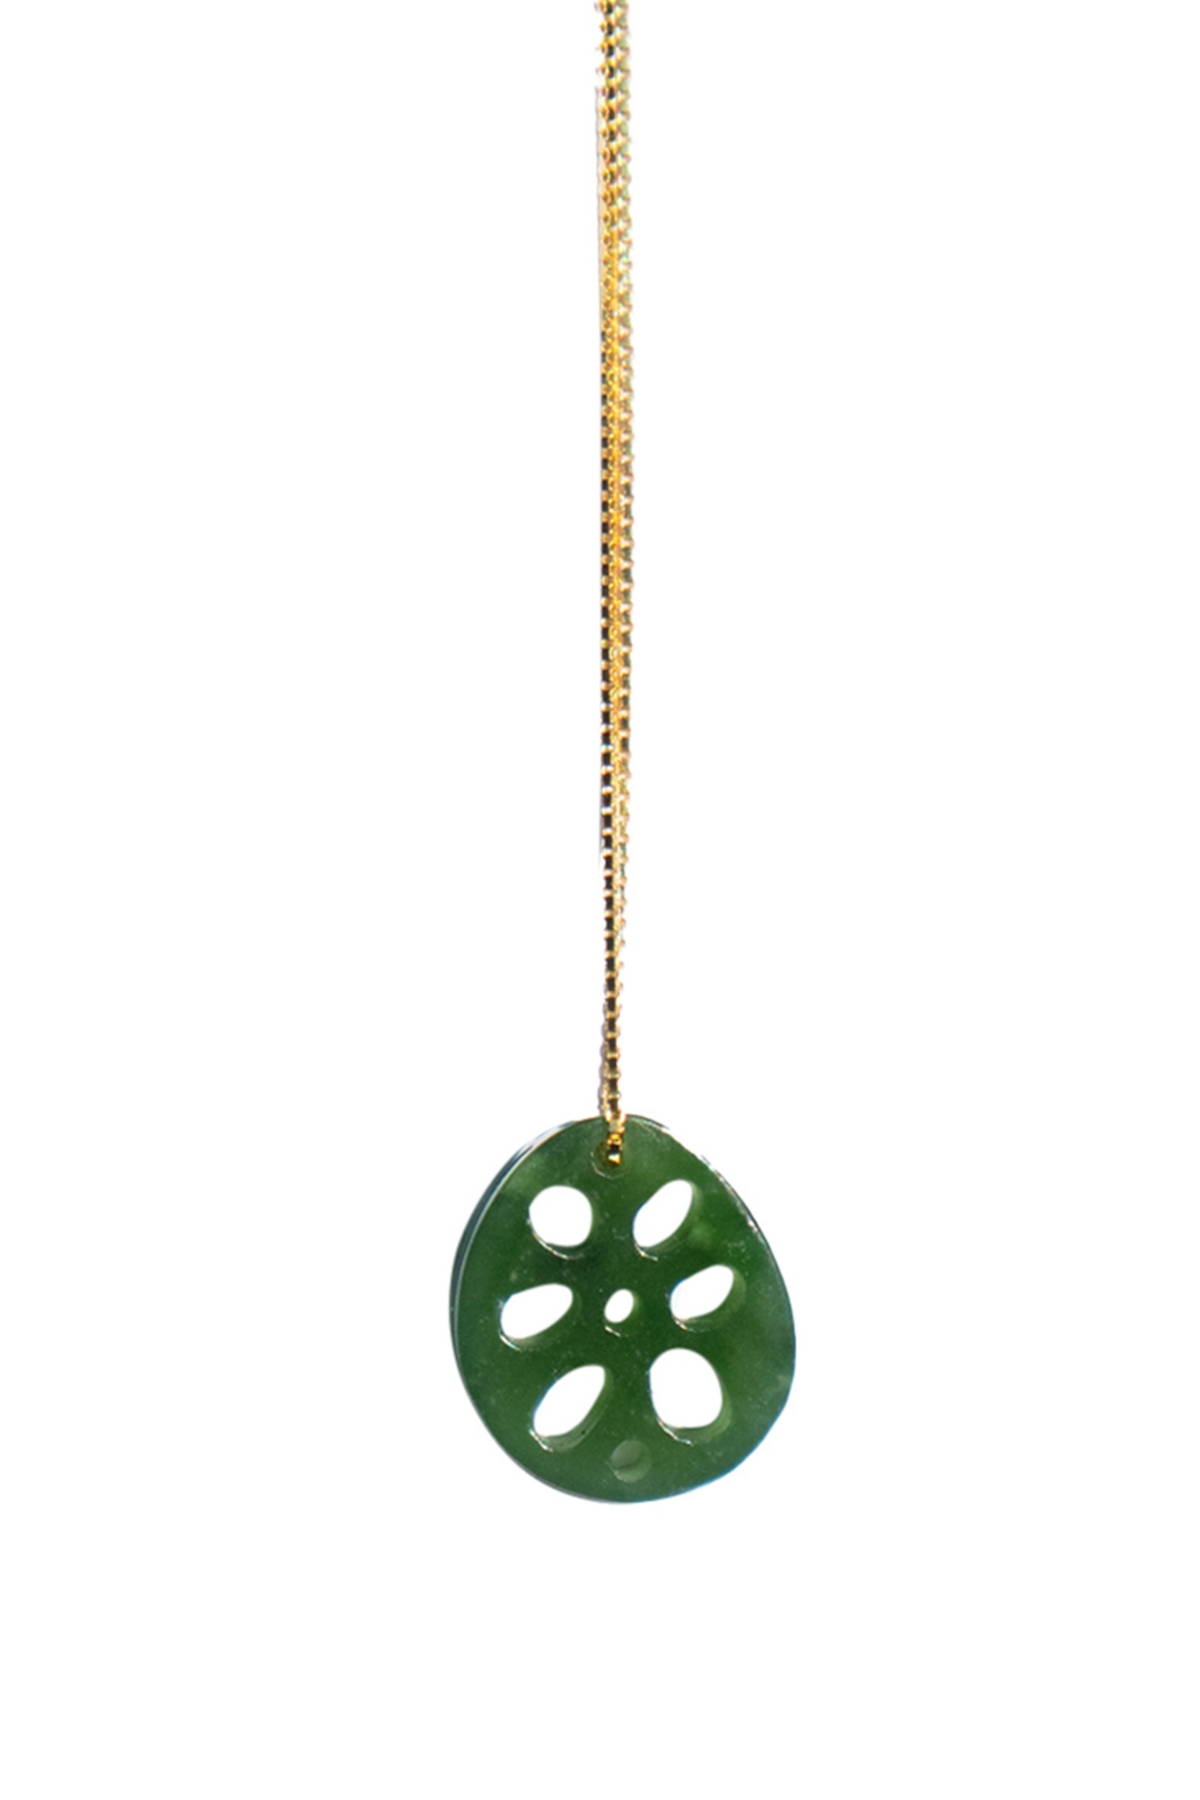 Lotus root - Jade pendant necklace - Green